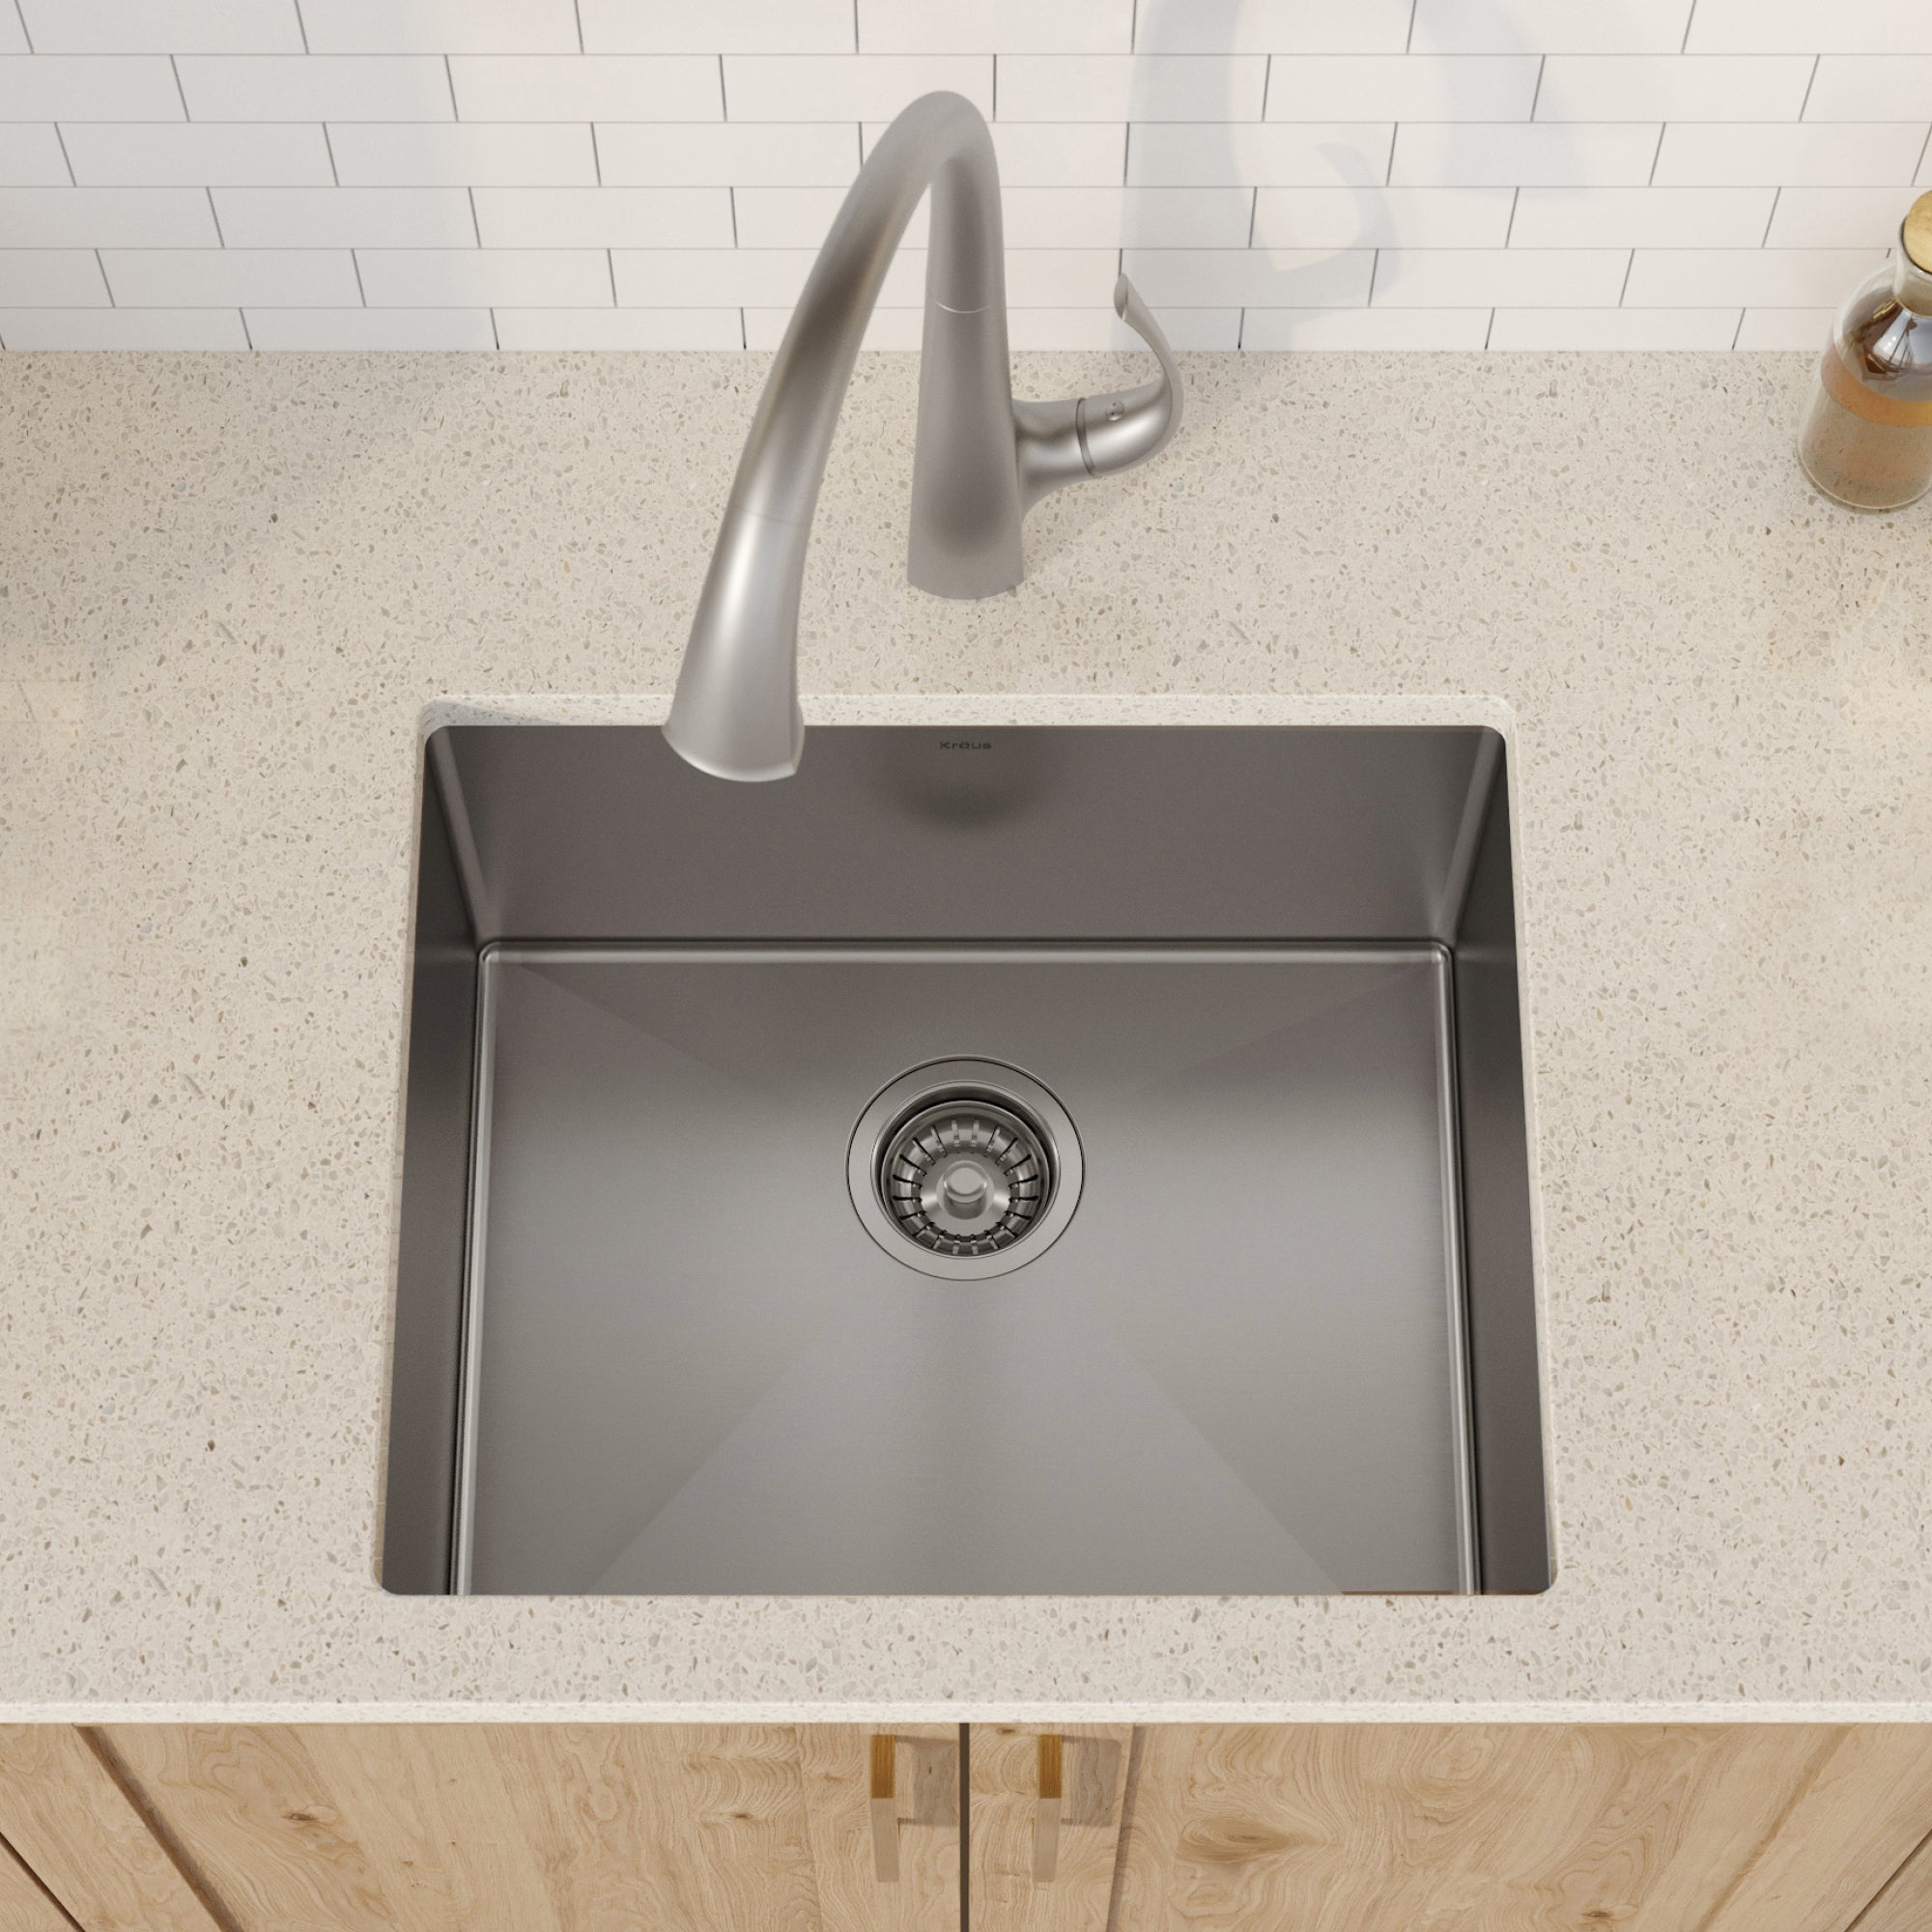 KRAUS 21" 16 Gauge Undermount Single Bowl Stainless Steel Kitchen Sink-Kitchen Sinks-DirectSinks